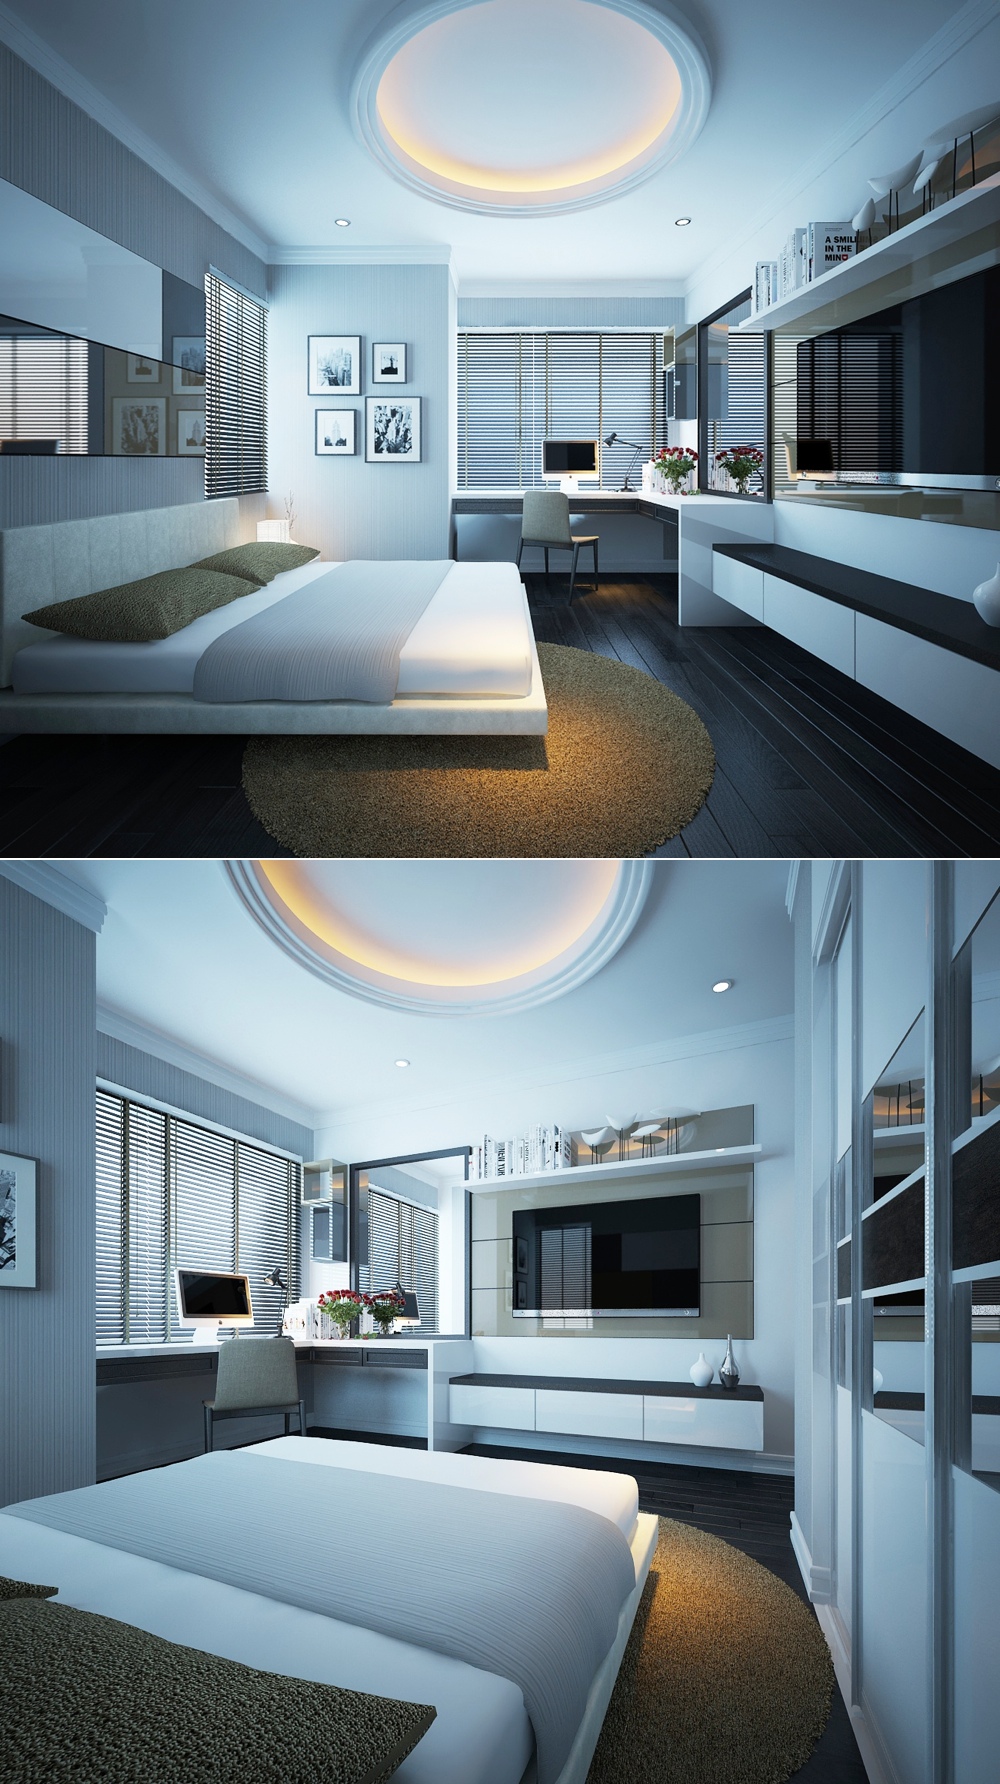 Contemporary Bedroom Design with Platform Bed